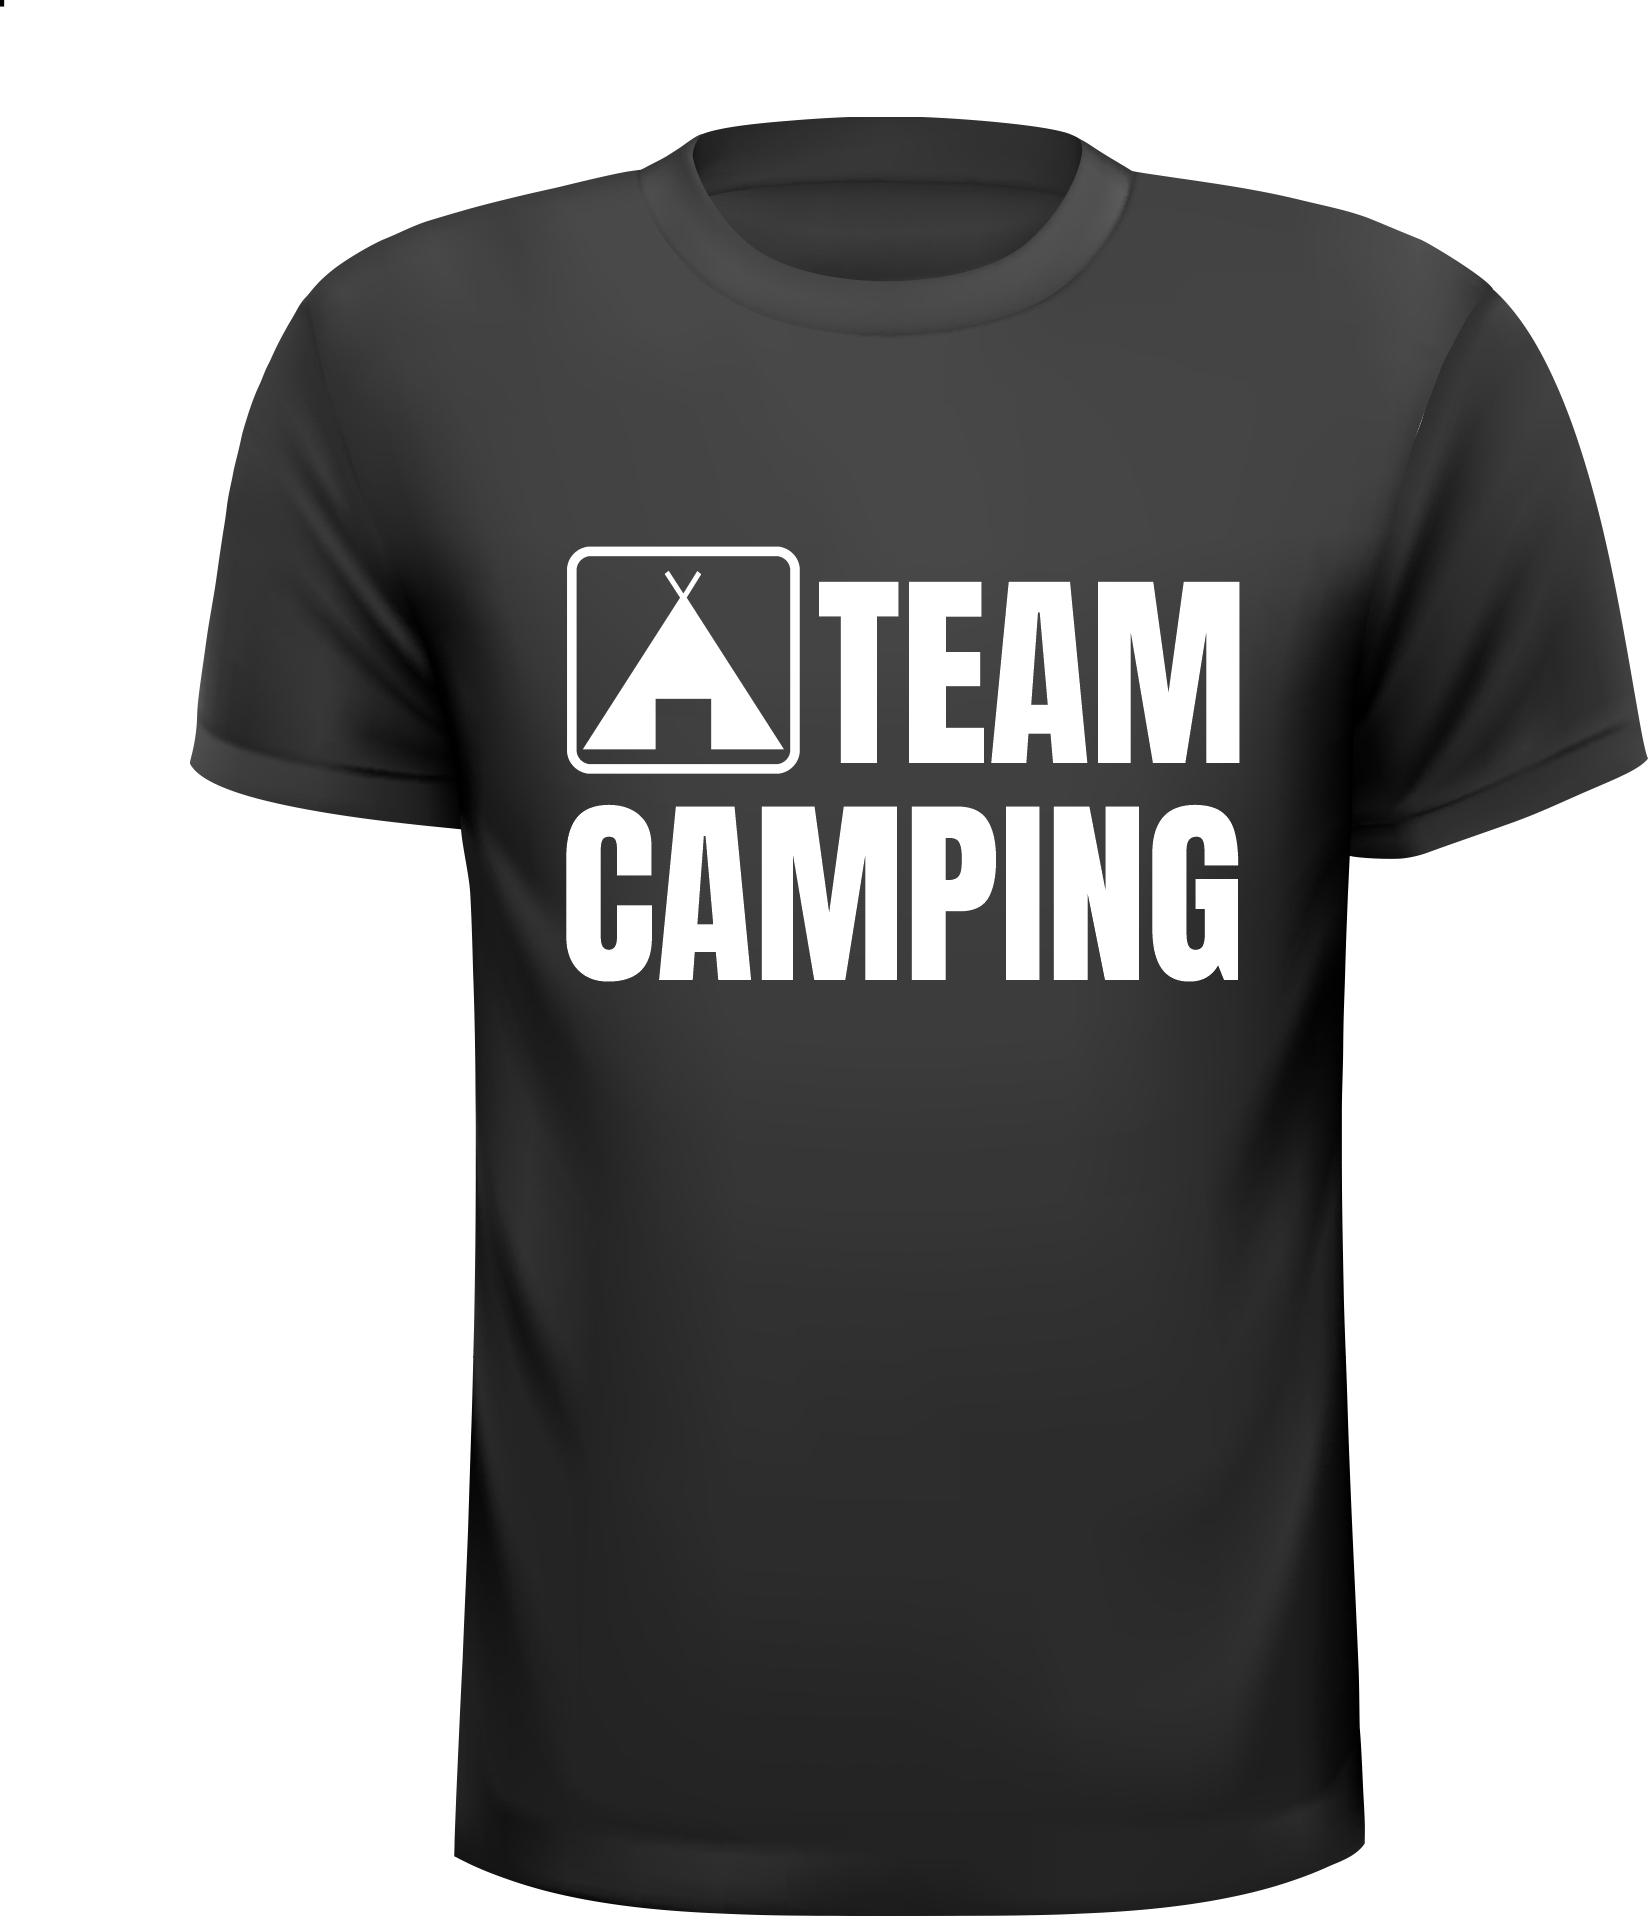 Shirtje voor team camping. Het camping Team T-shirt